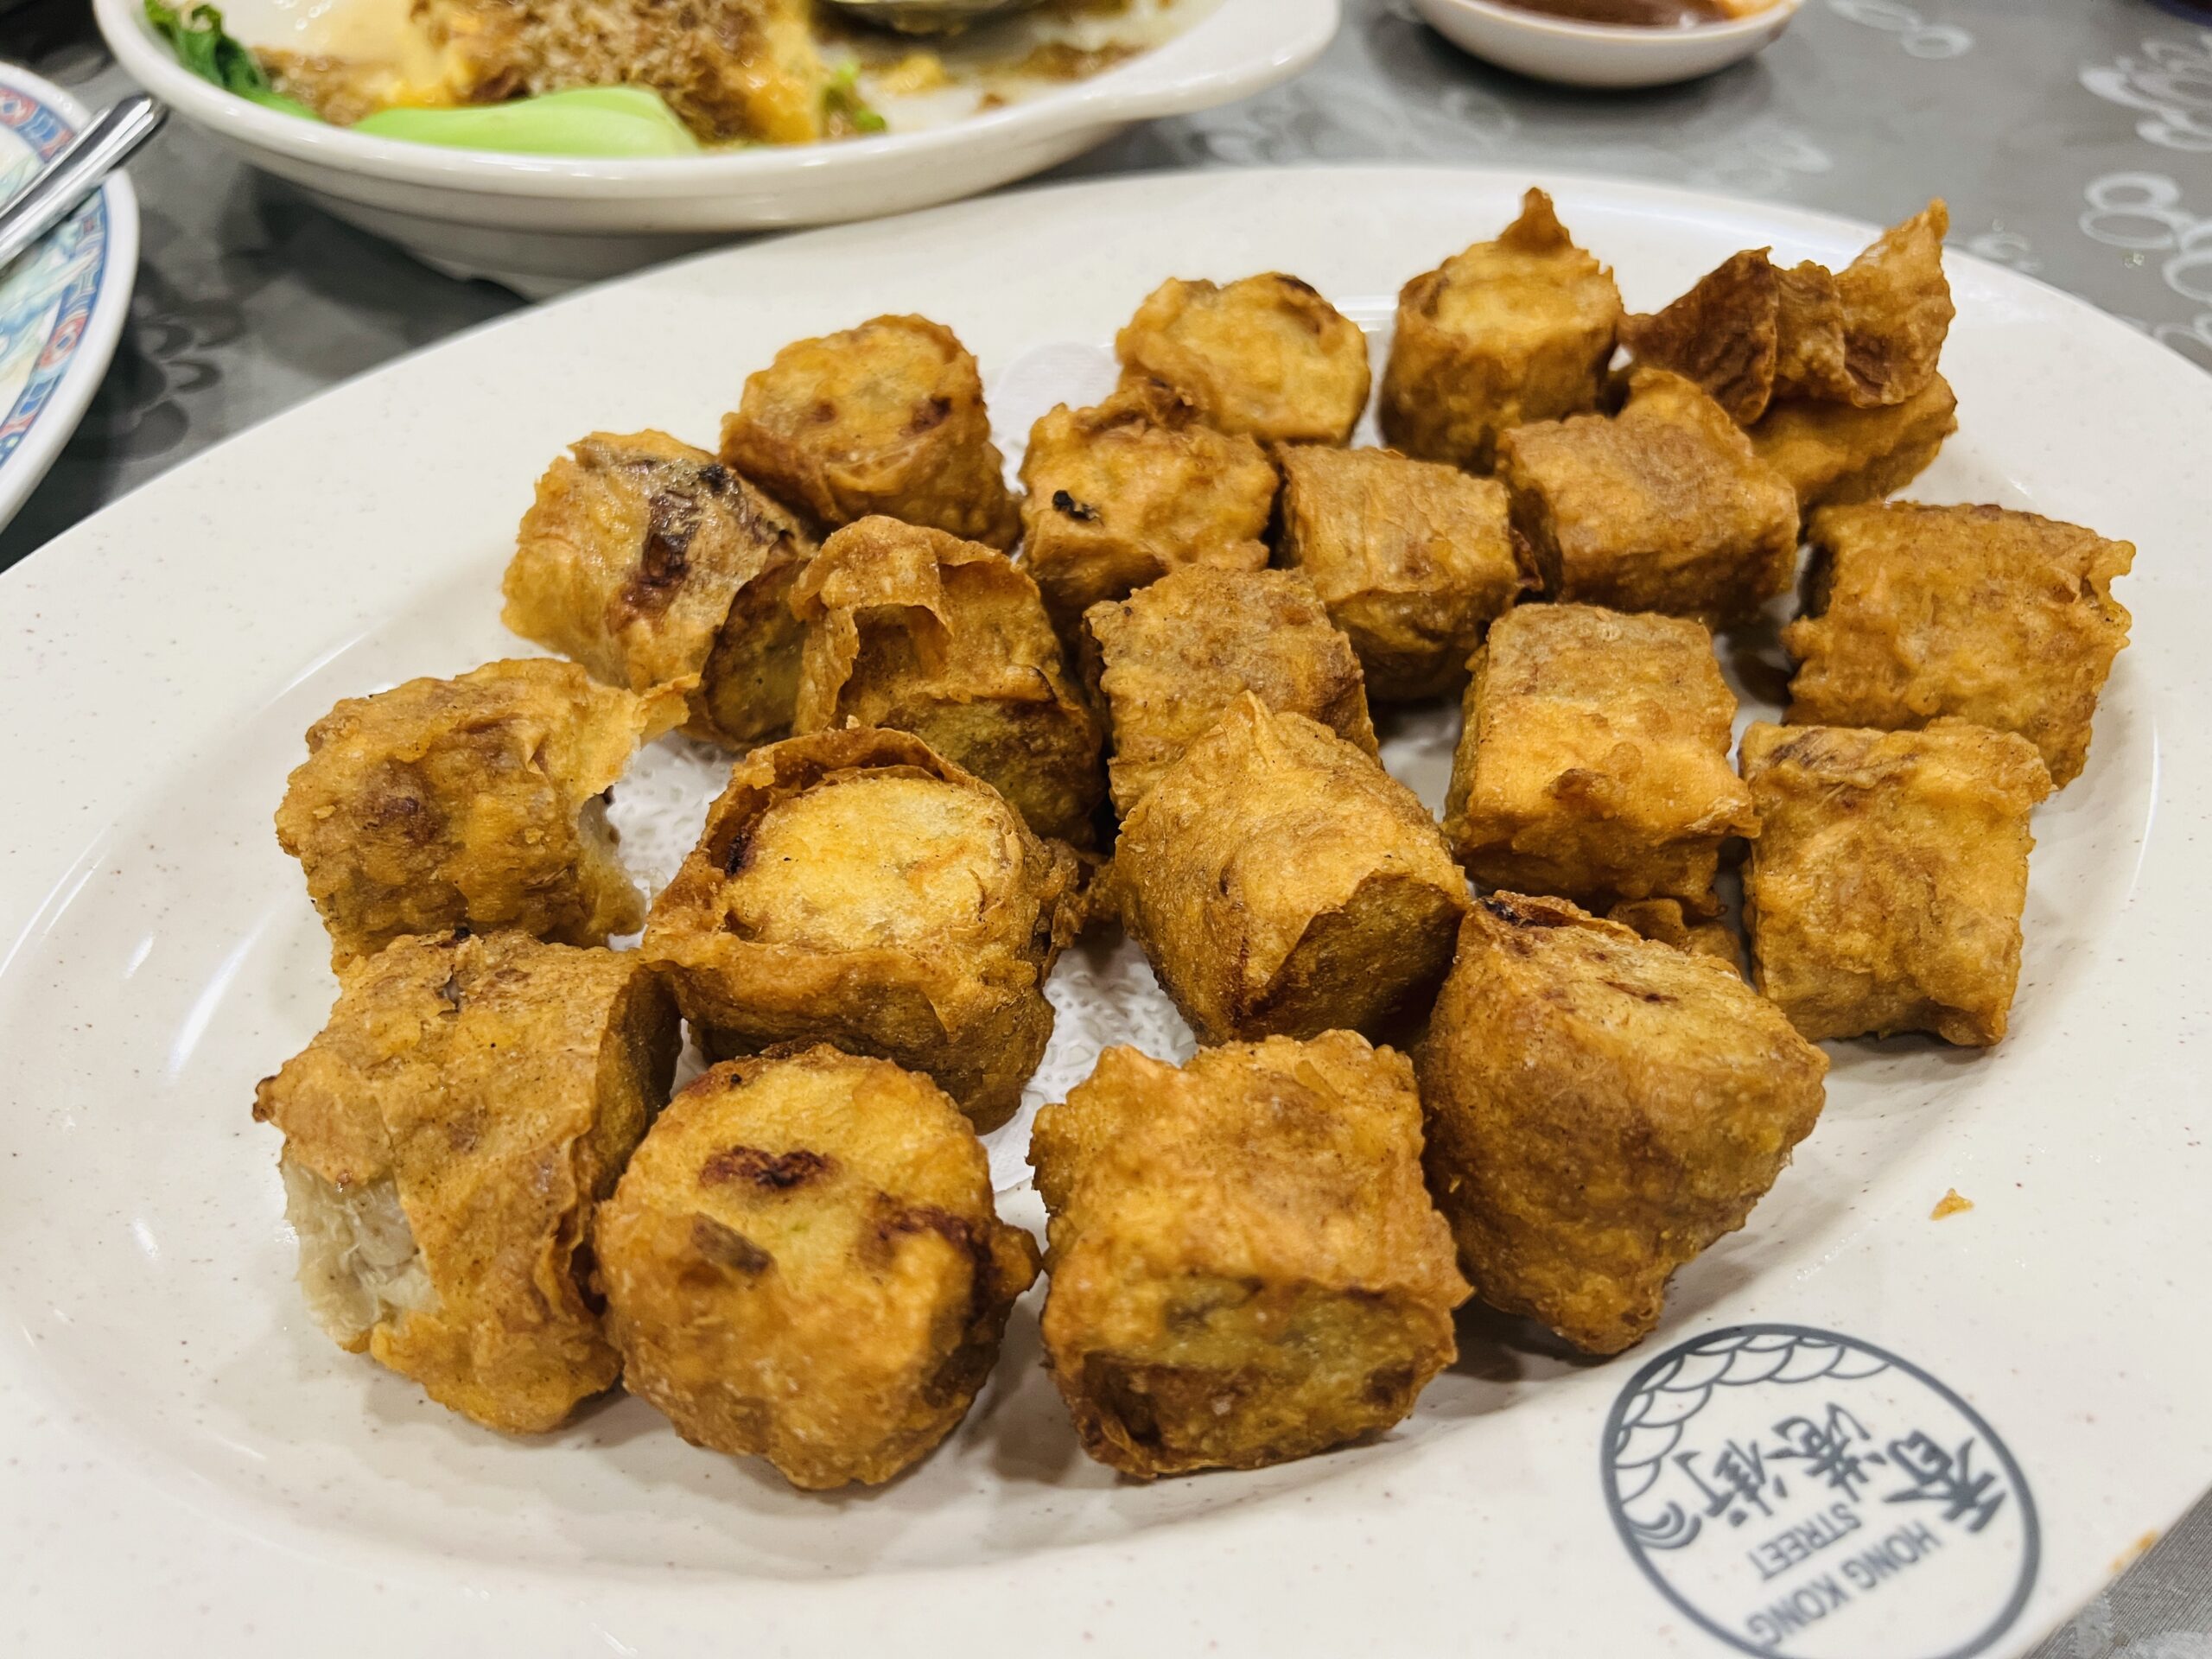 Hong Kong Street Restaurant Novena - Prawn & Minced Meat Rolls